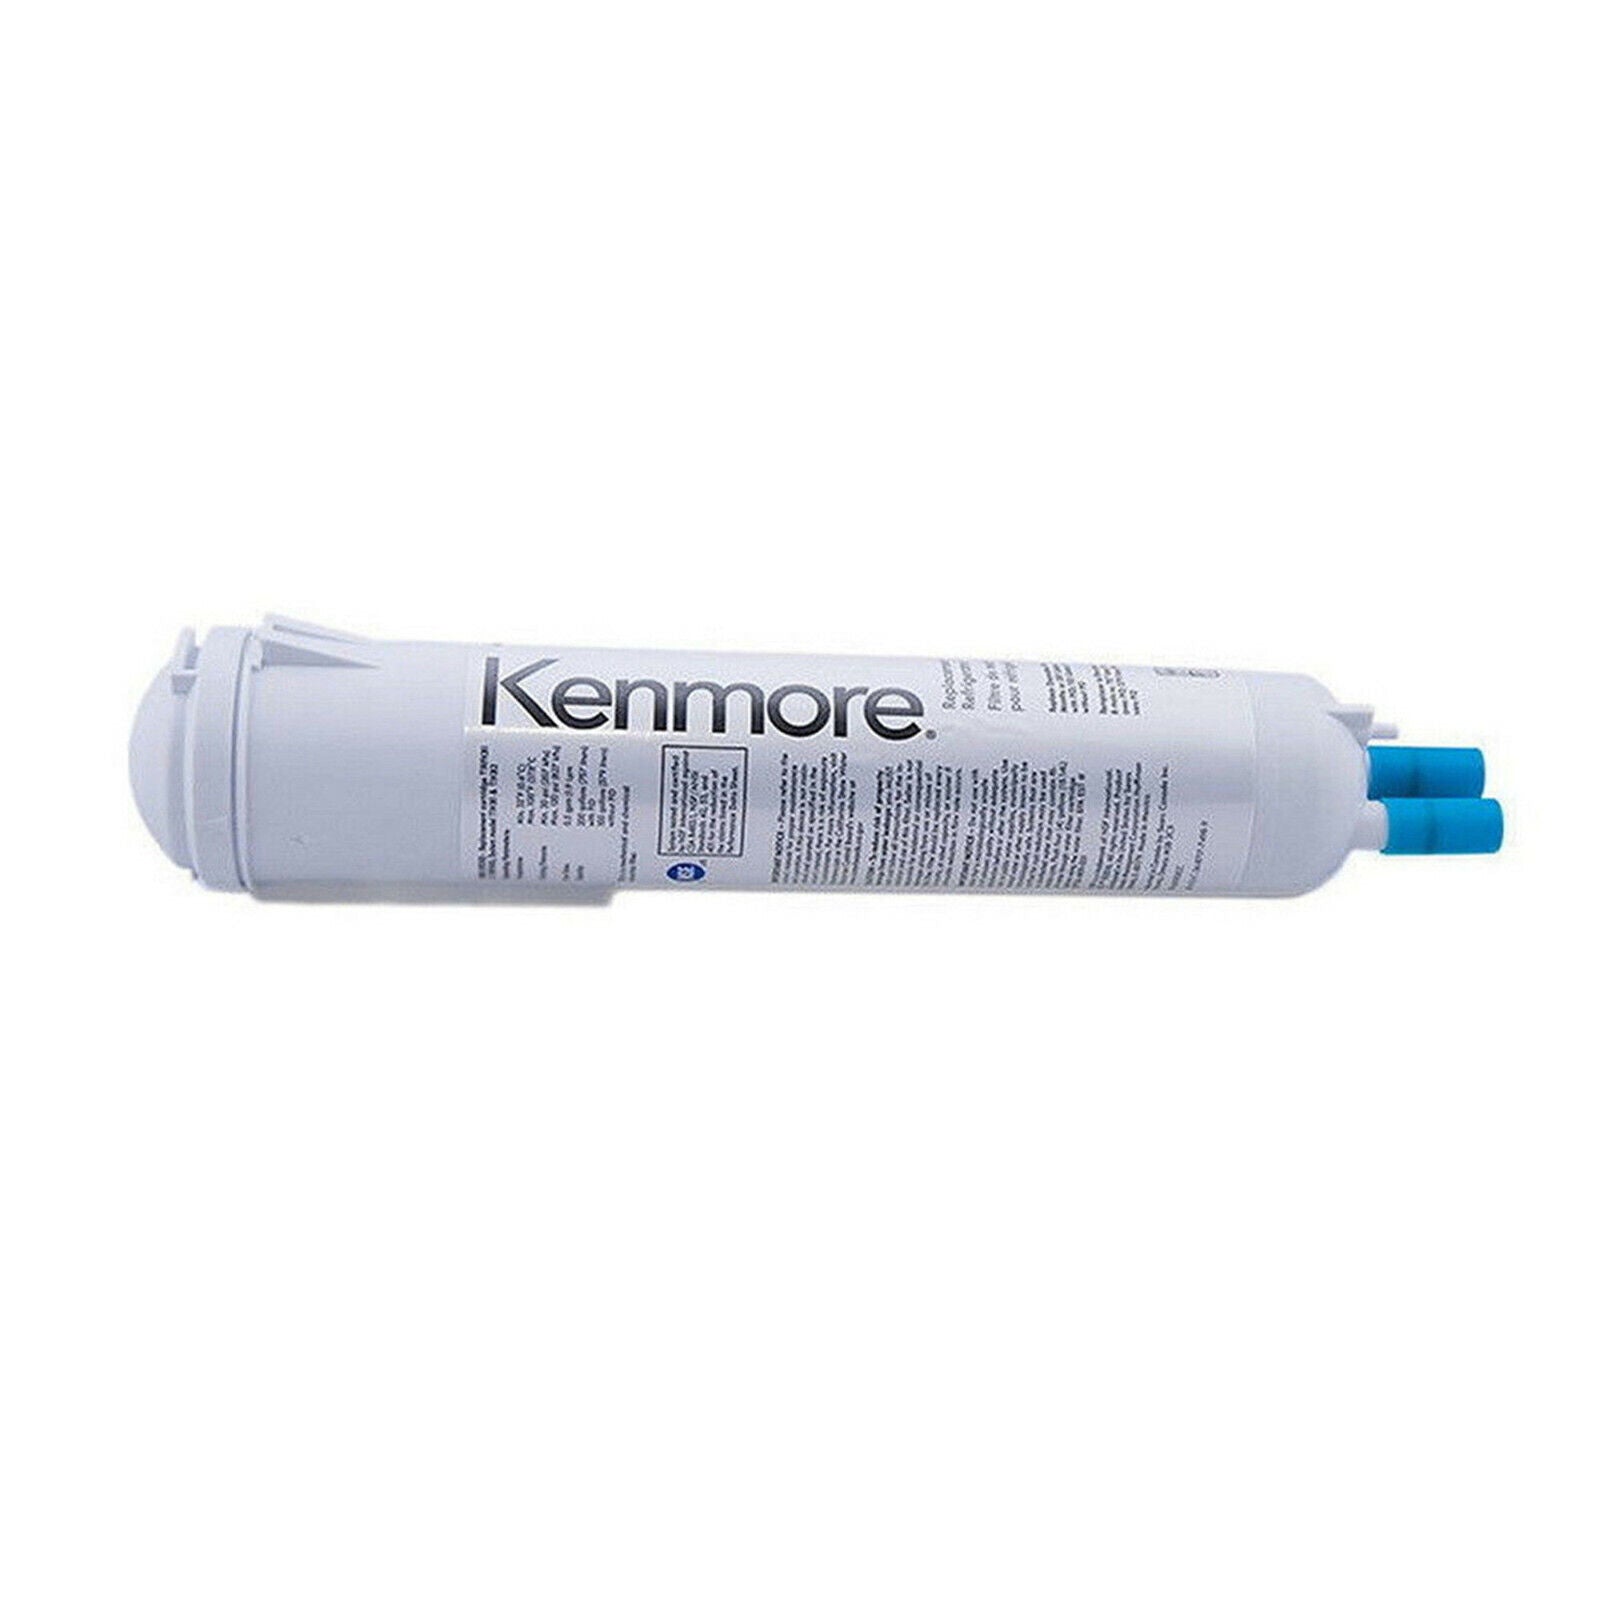 Kenmore 9083 Replacement Refrigerator Water Filter